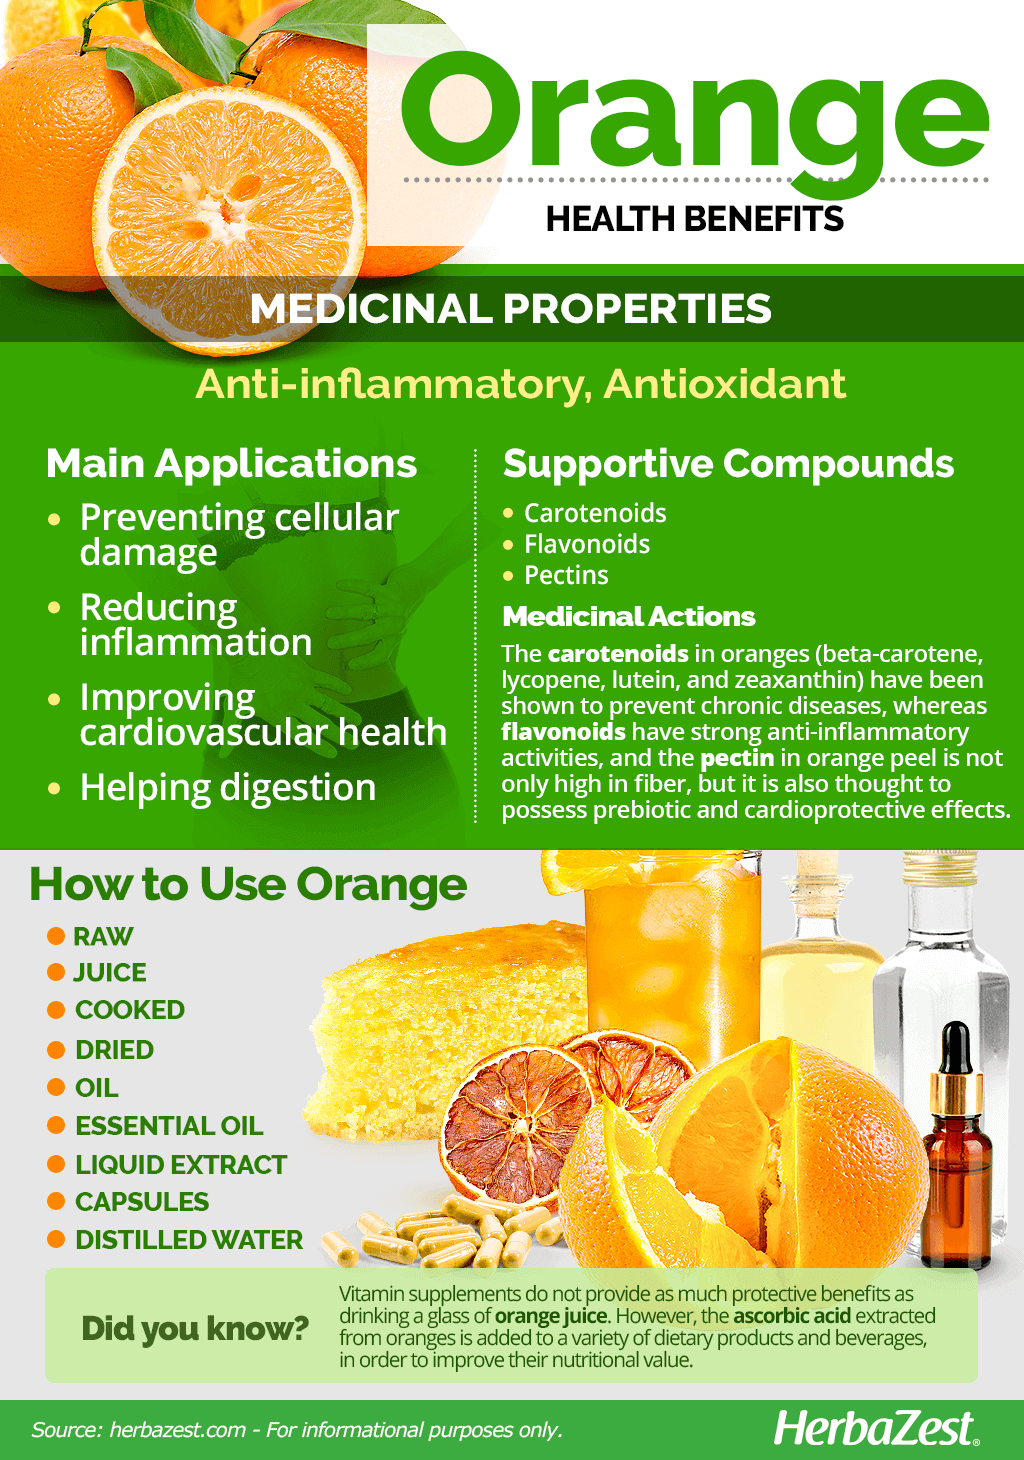 Bitter orange and antioxidant properties